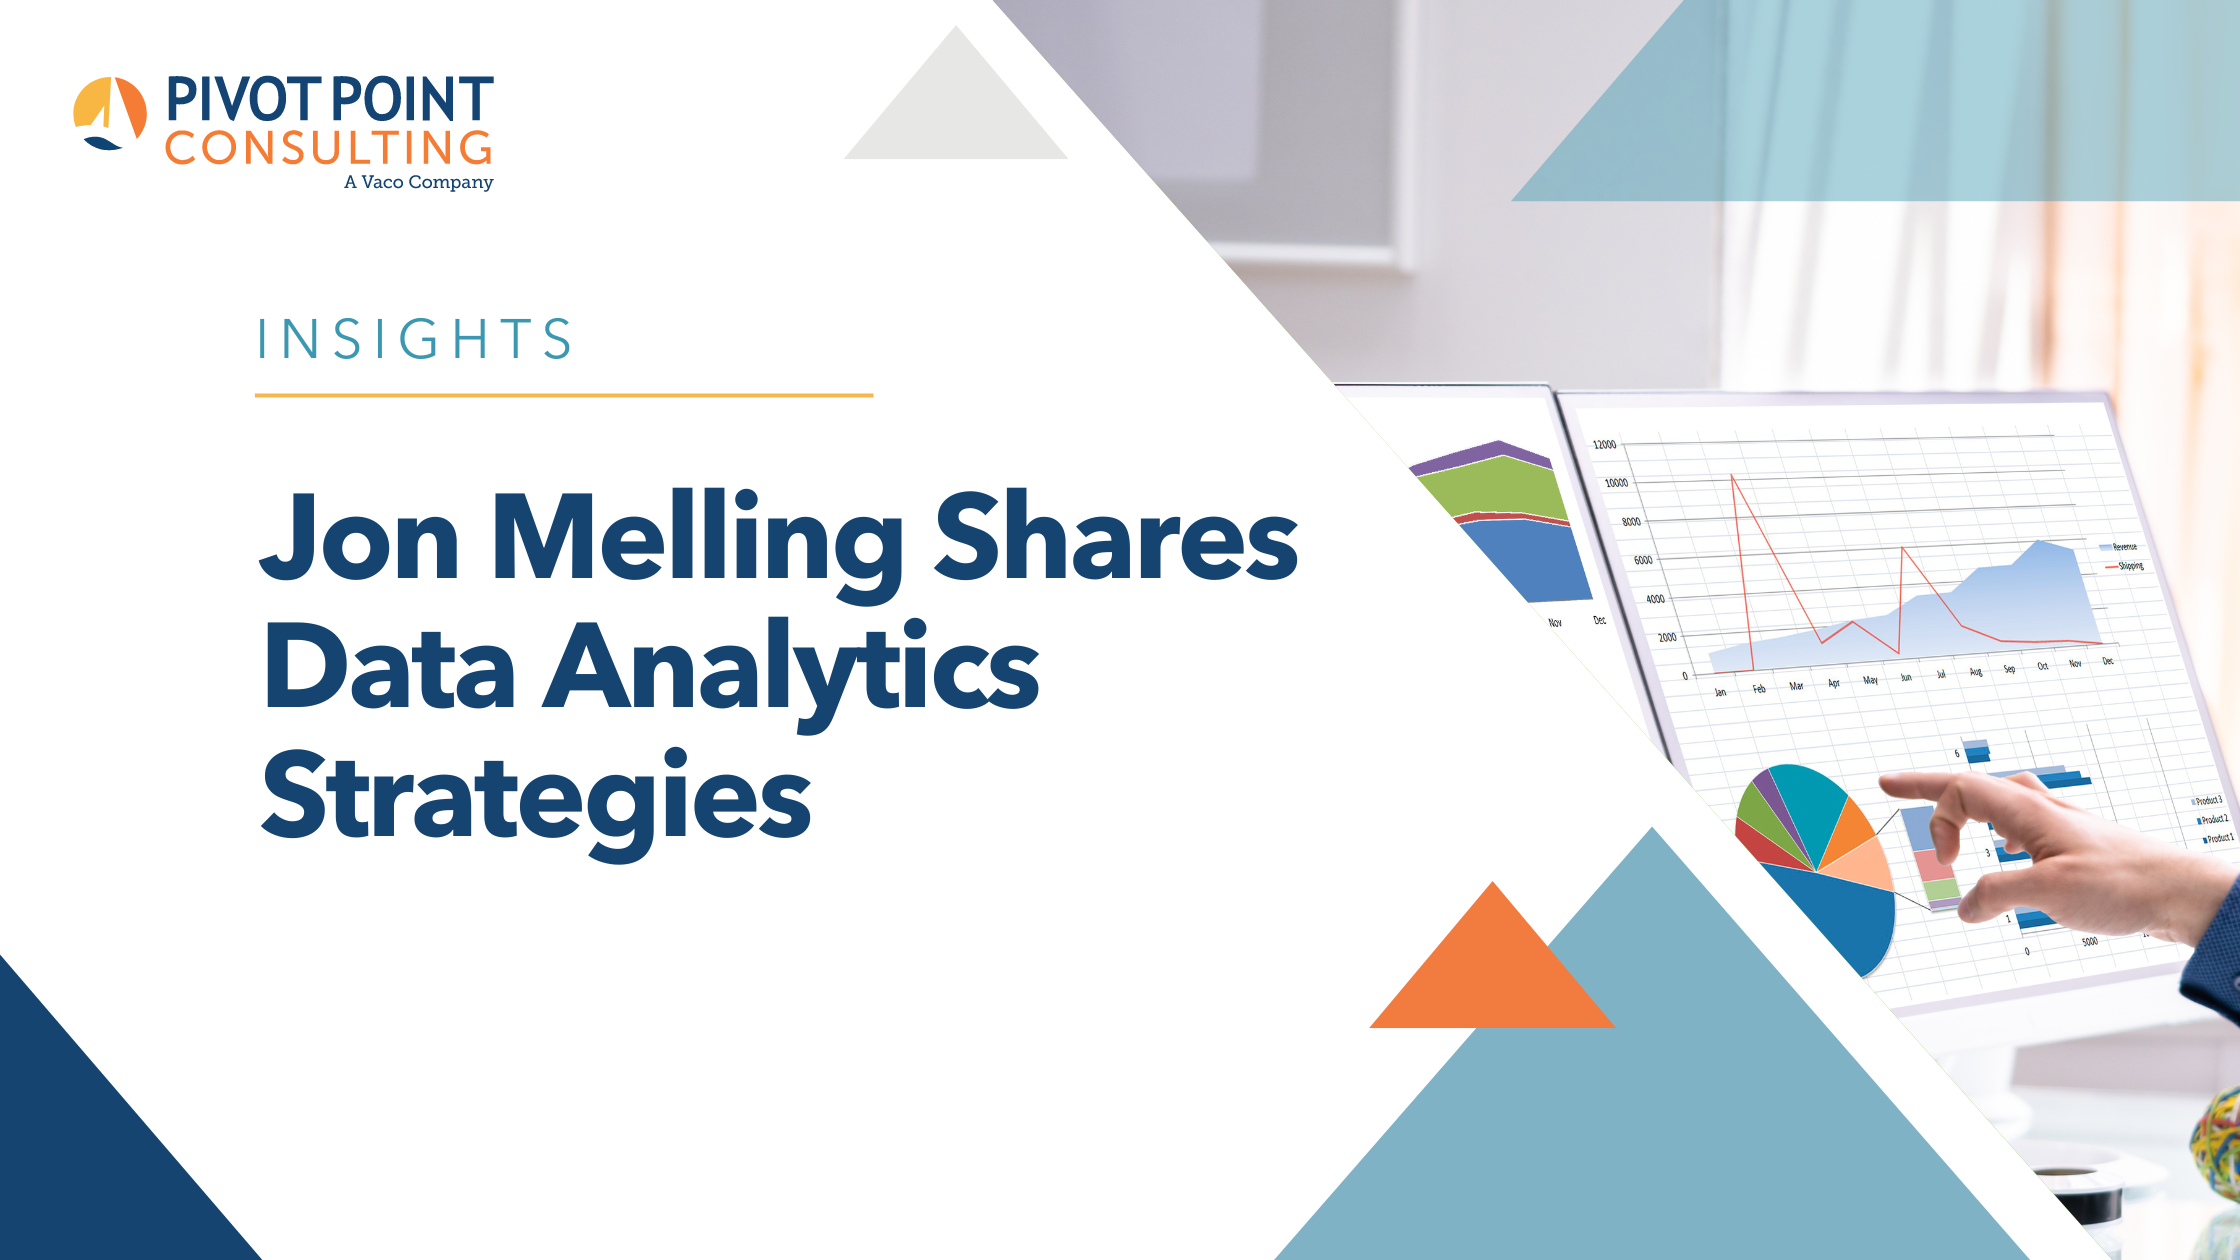 Jon Melling Shares Data Analytics Strategies blog post